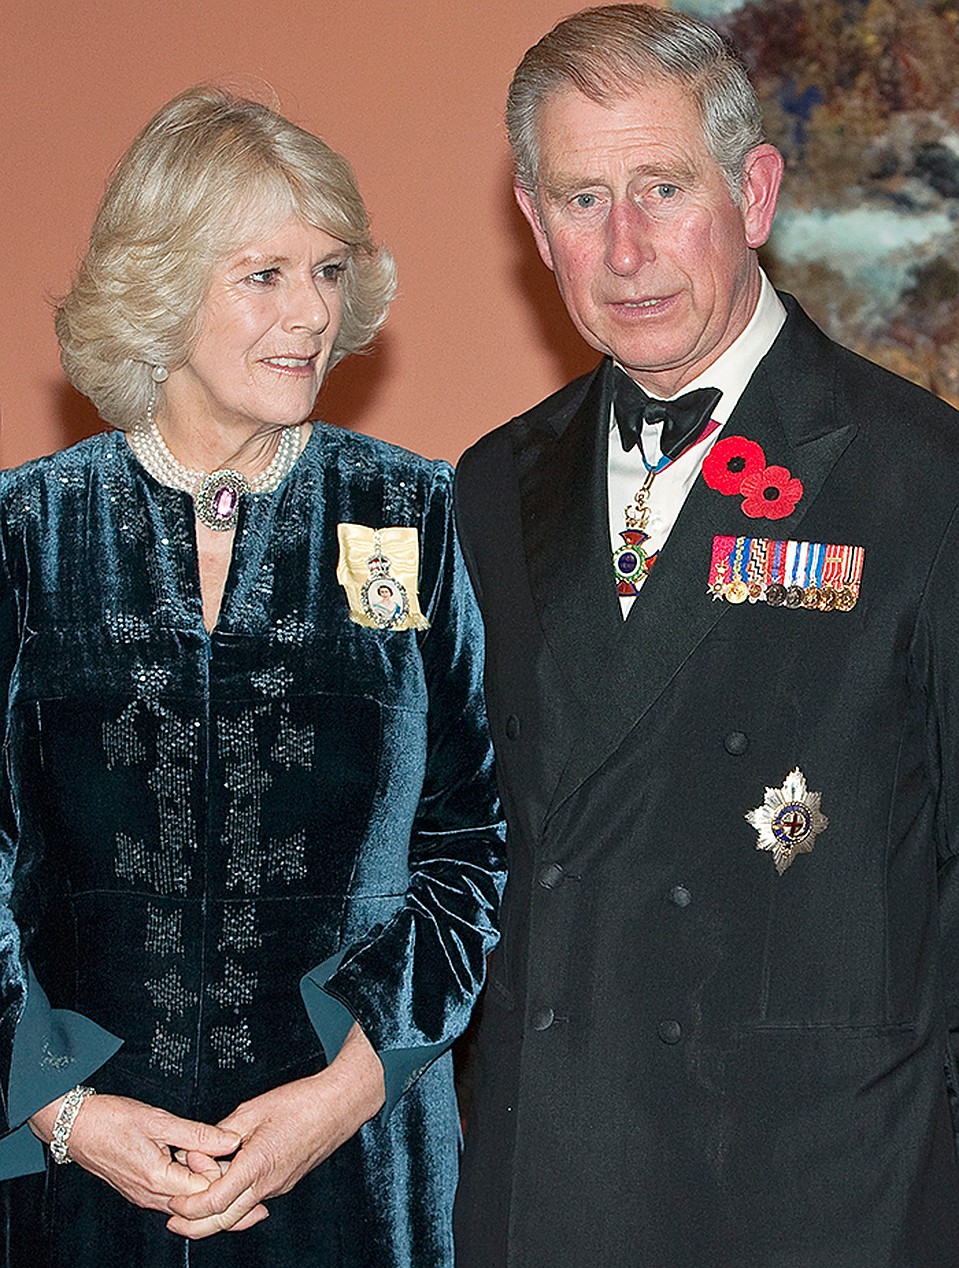 Королева дала согласие на брак Чарльза и разведённой Камиллы Паркер Боулз Фото: GLOBAL LOOK PRESS